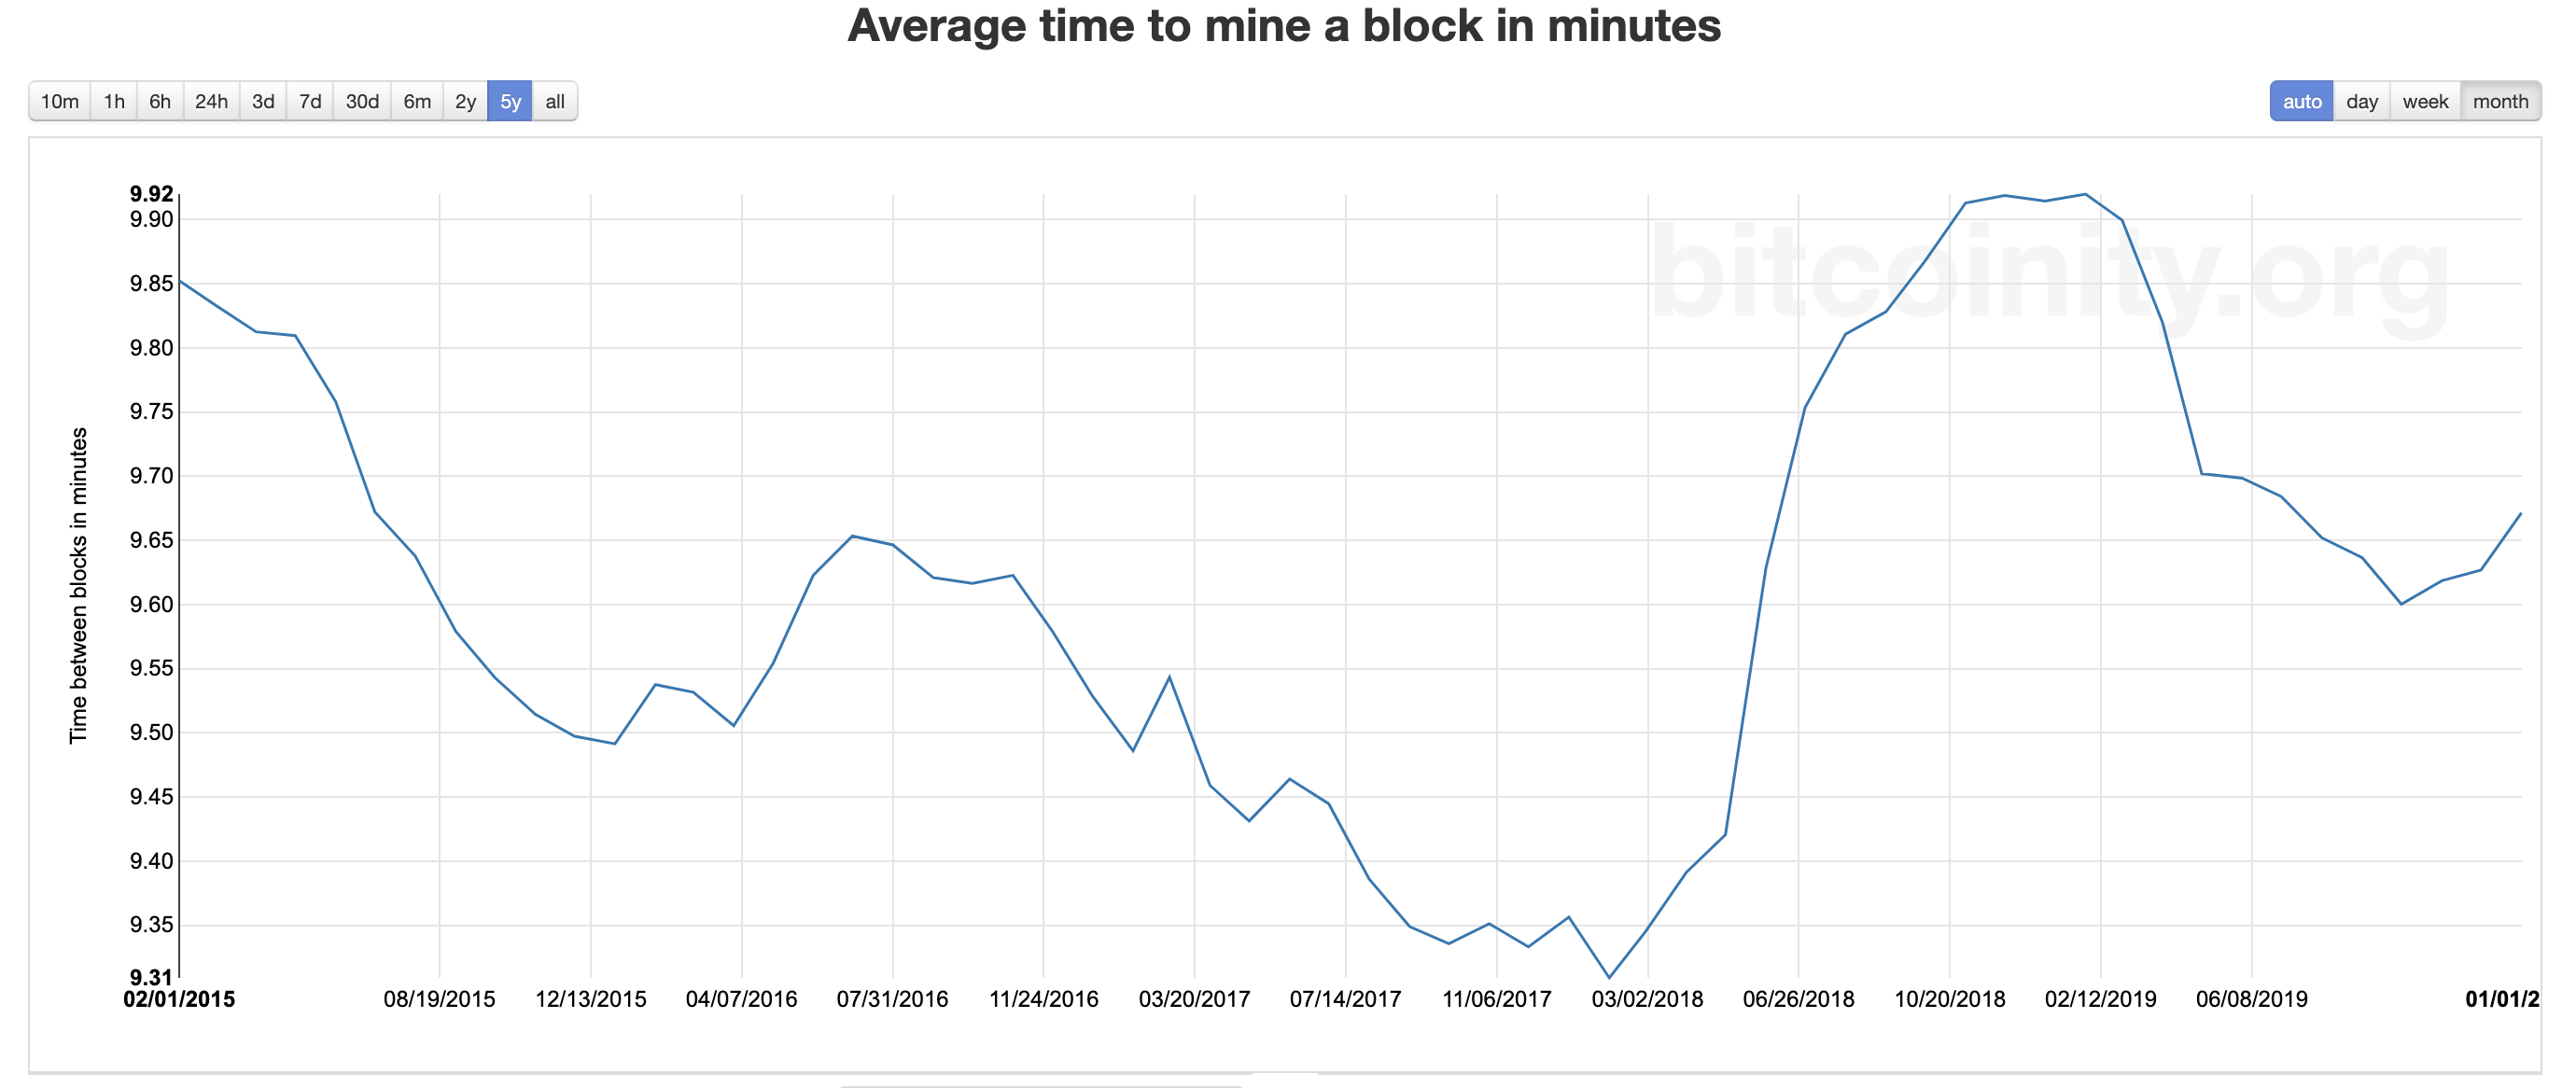 halving-average-block-time.png